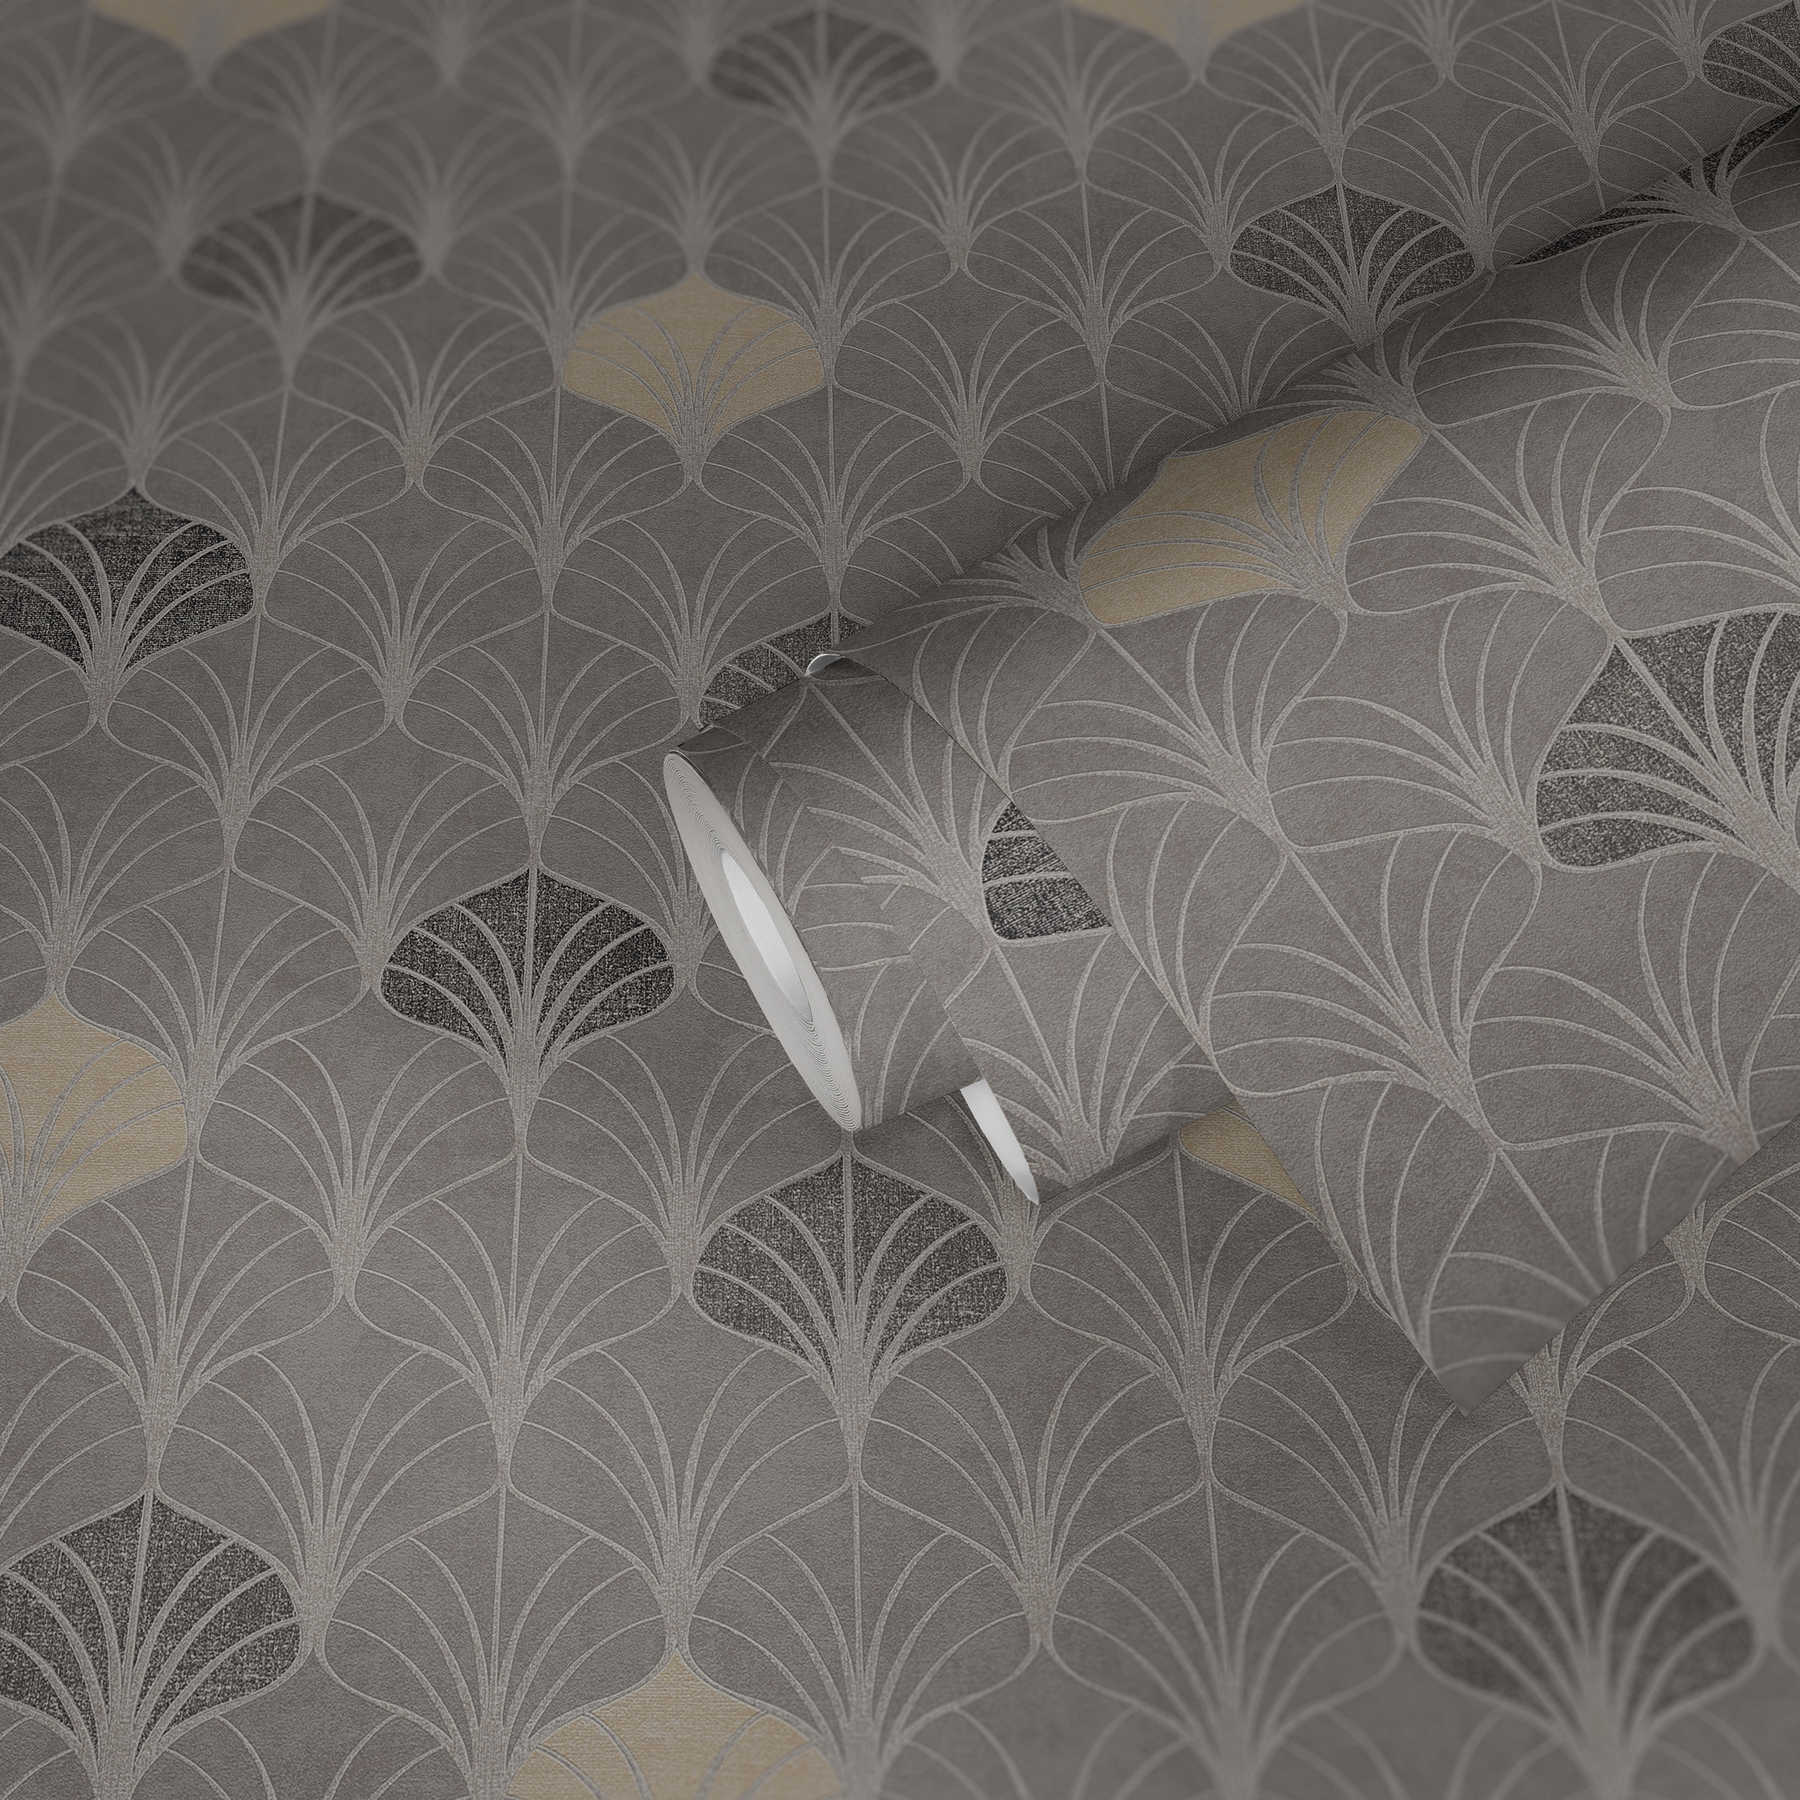             Pattern wallpaper art deco style with metallic effect - grey, beige, brown
        